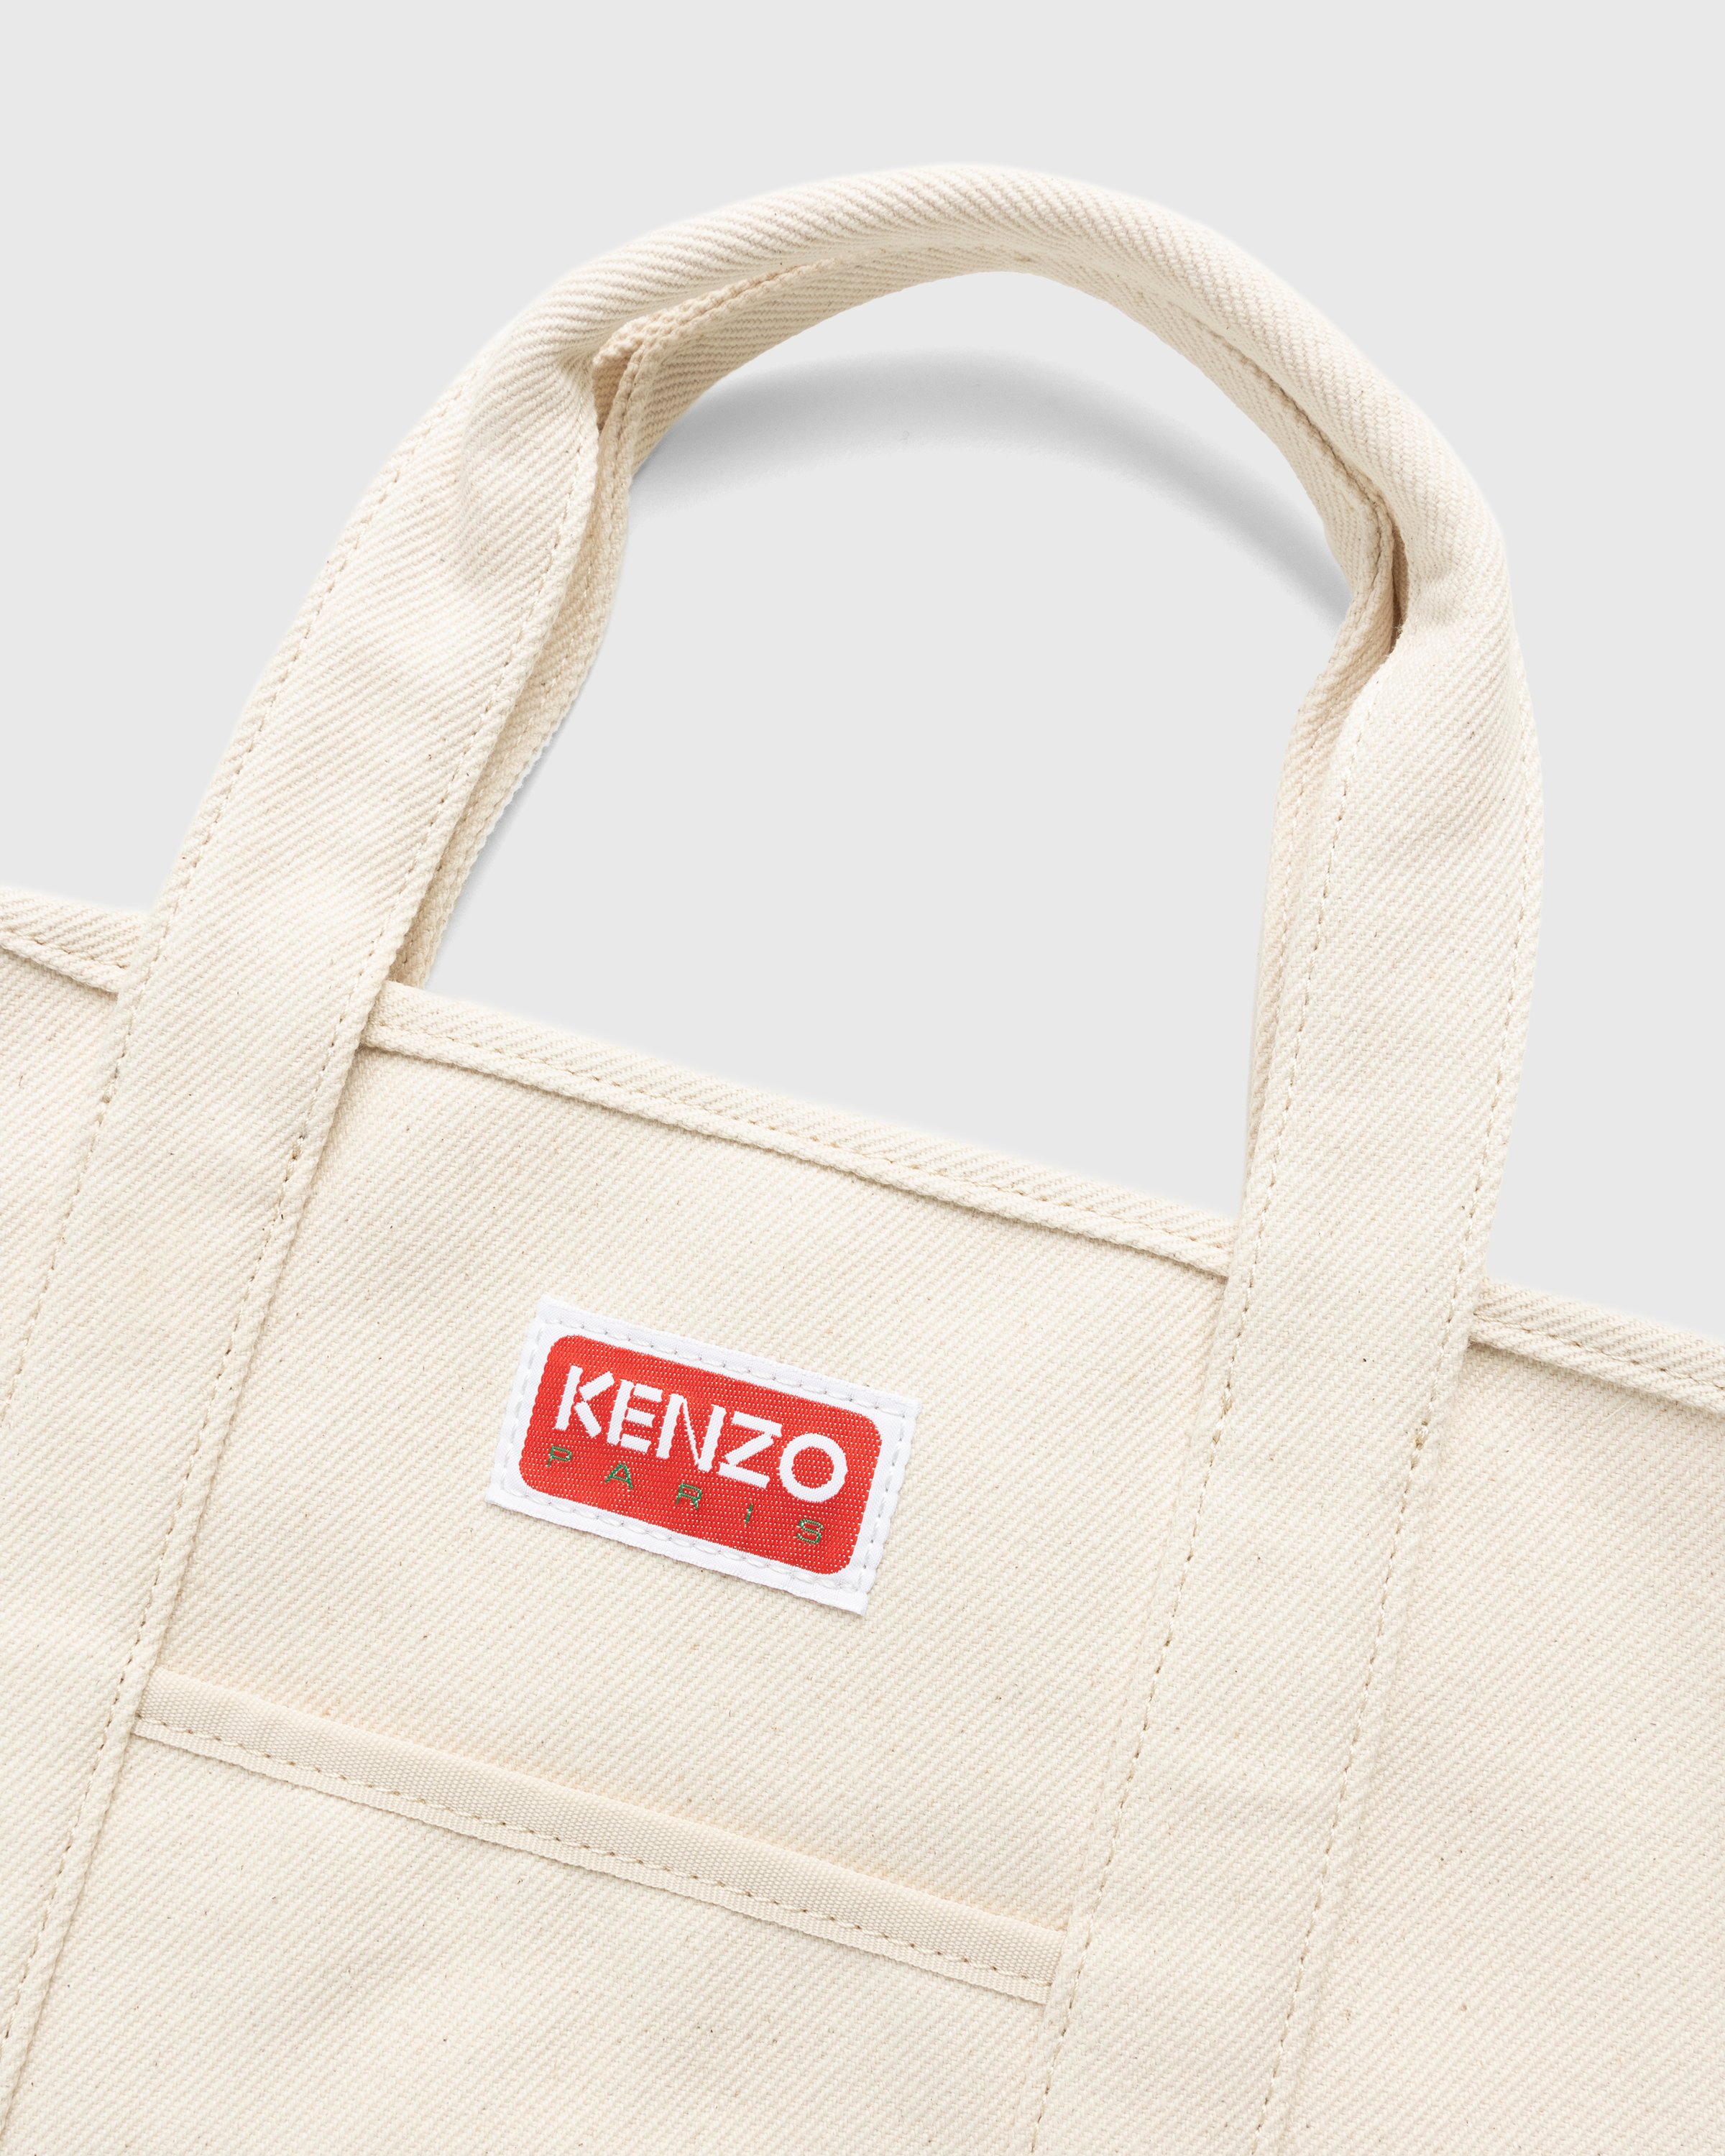 Kenzo - Poppy Tote Bag Ecru - Accessories - Beige - Image 4